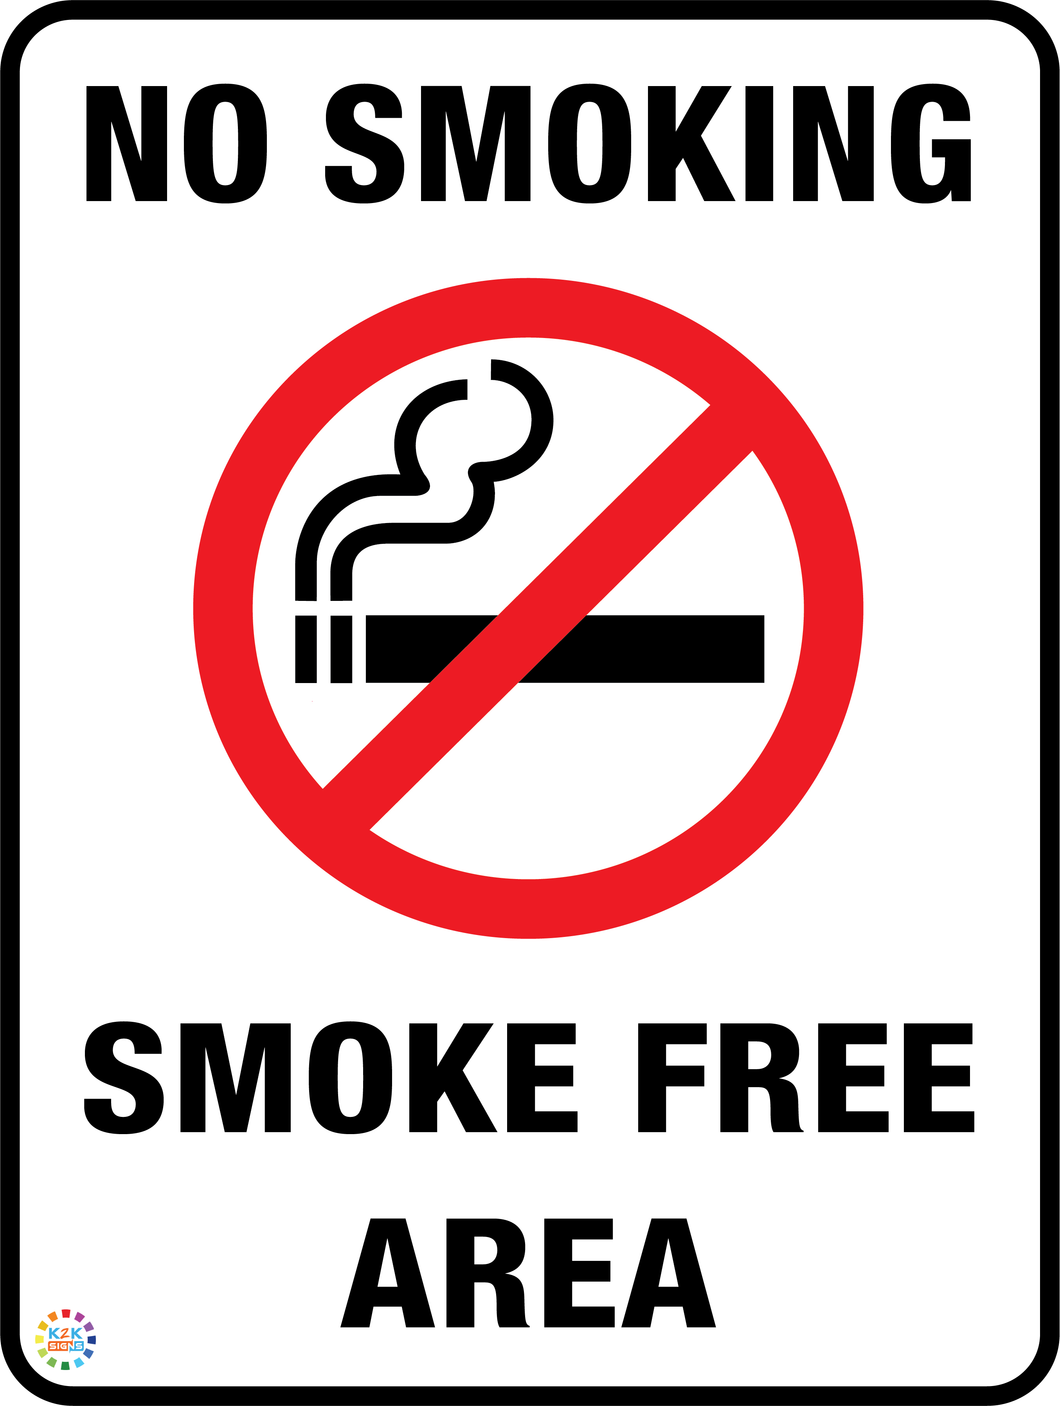 No Smoking - Smoke Free Area Sign